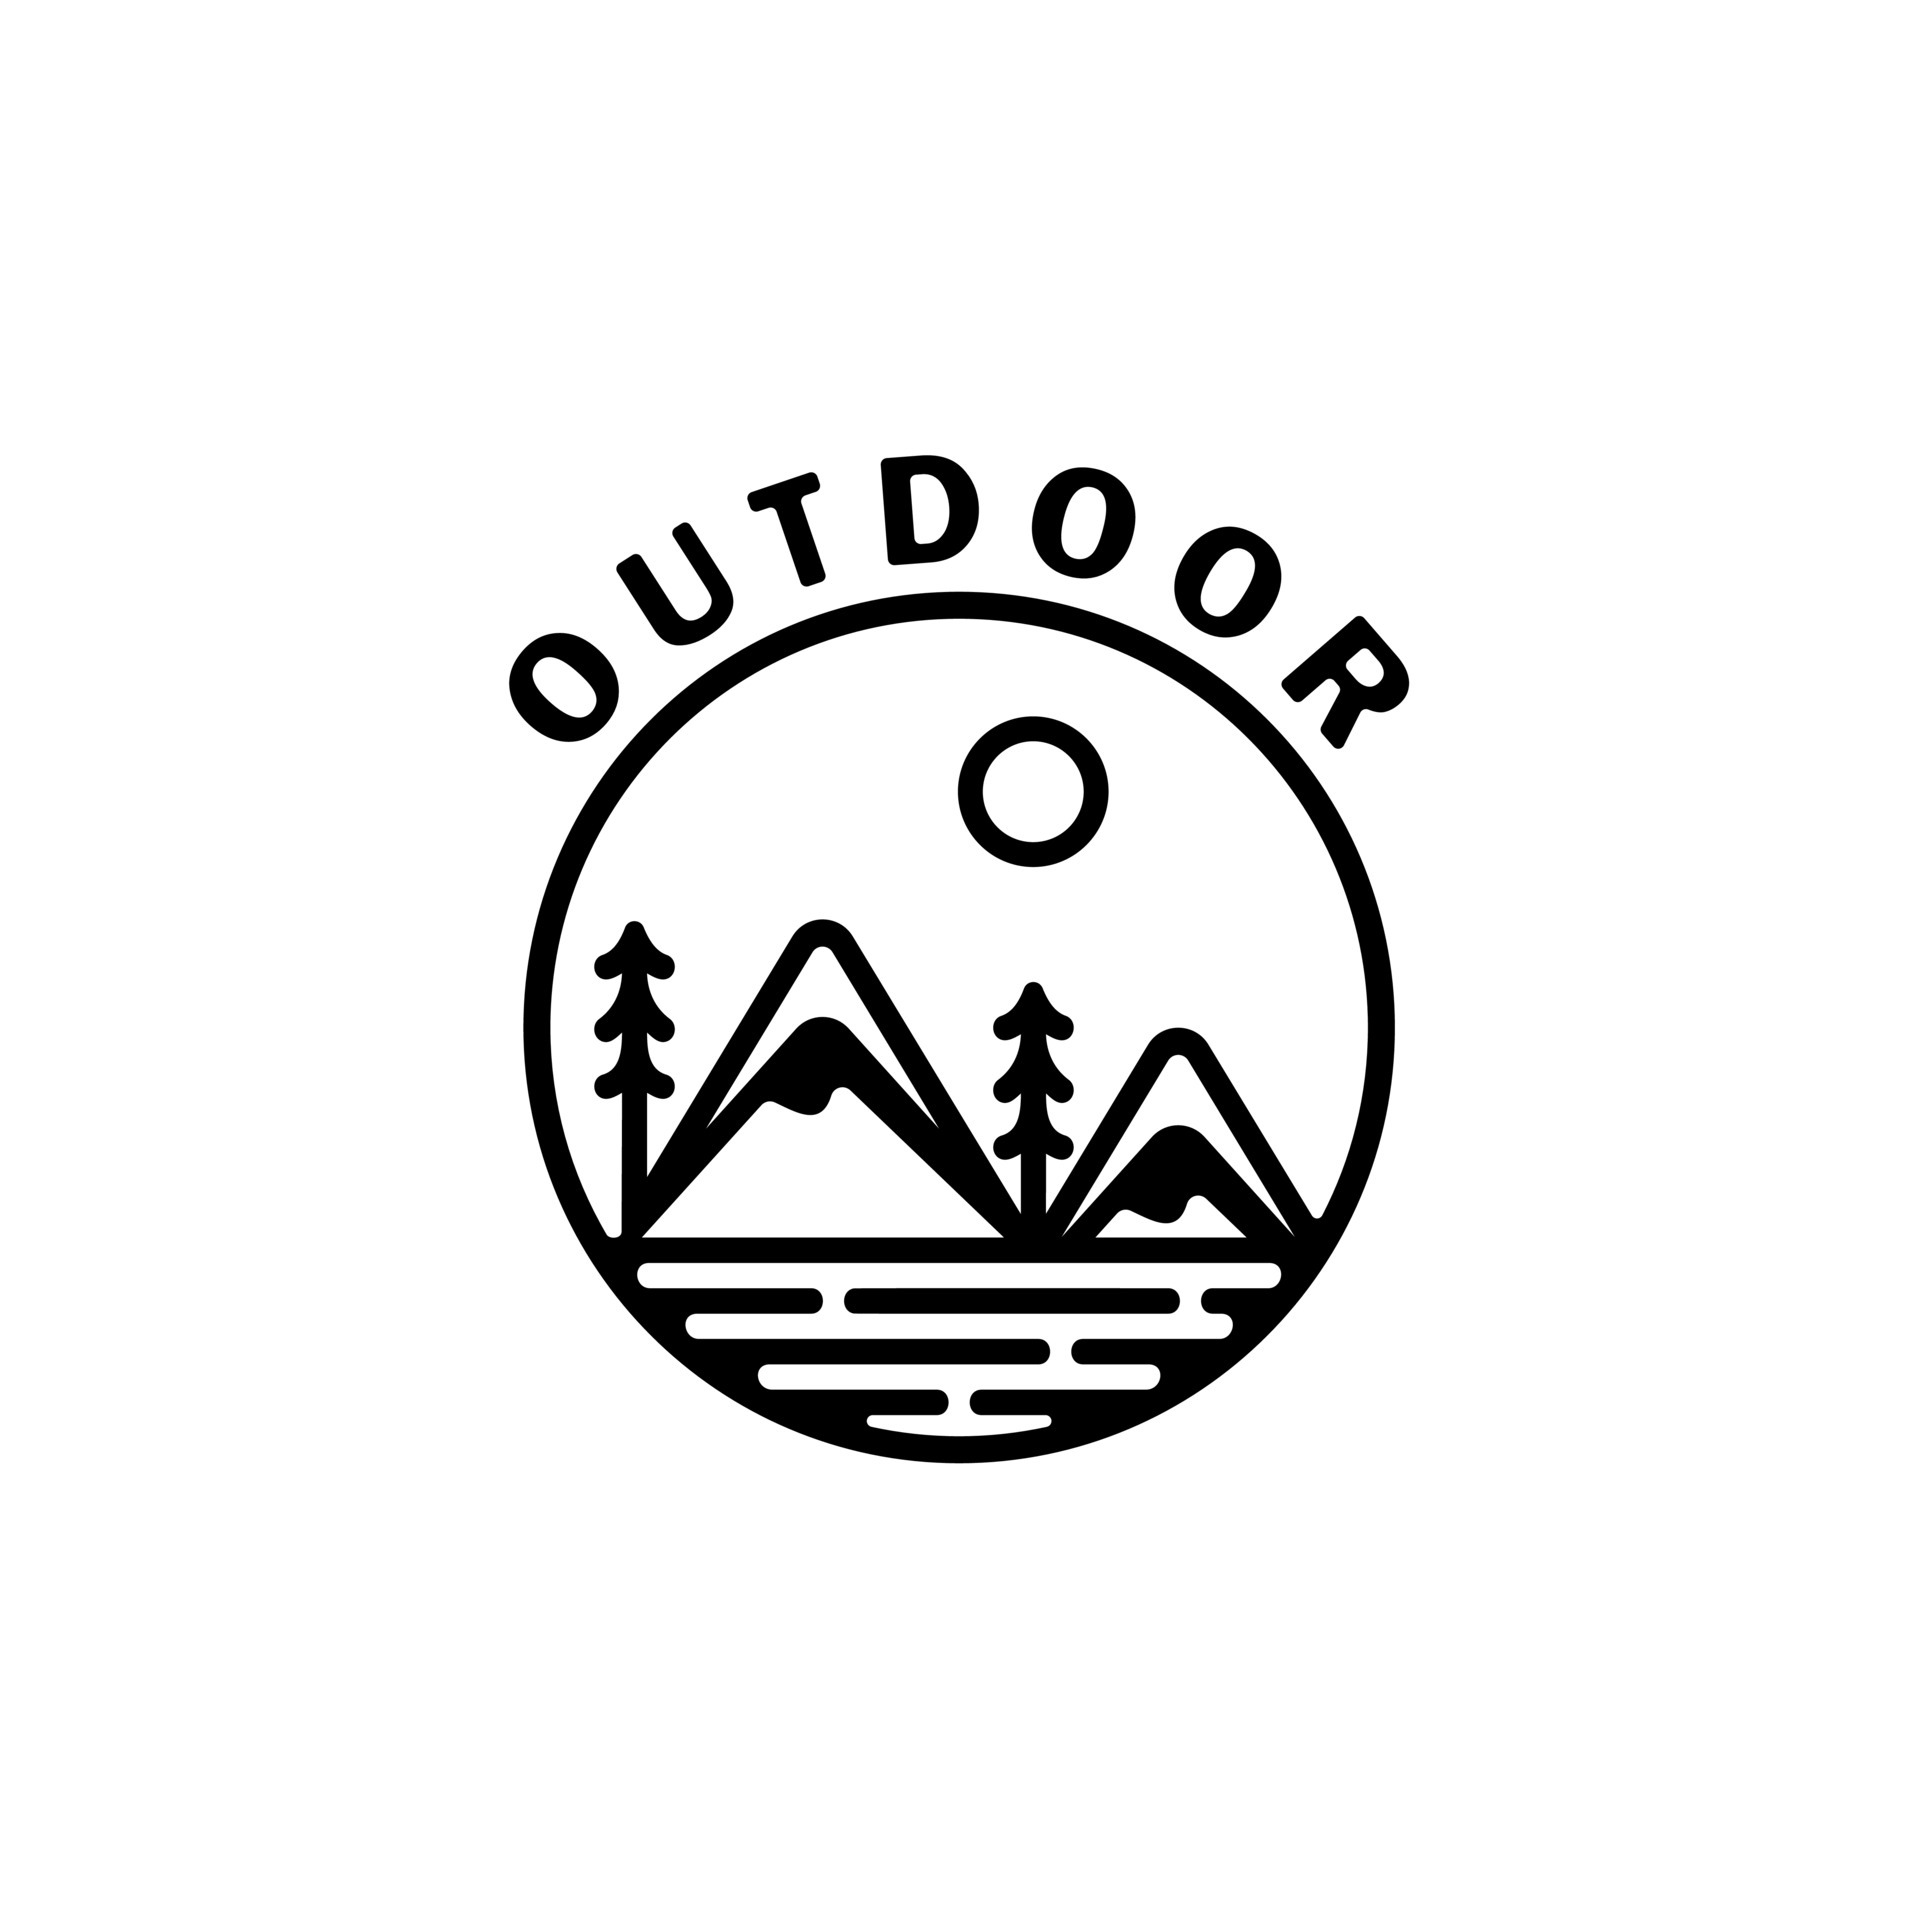 Retro Vintage Mountain and Sea Outdoor Adventure Logo Design 6020968 ...